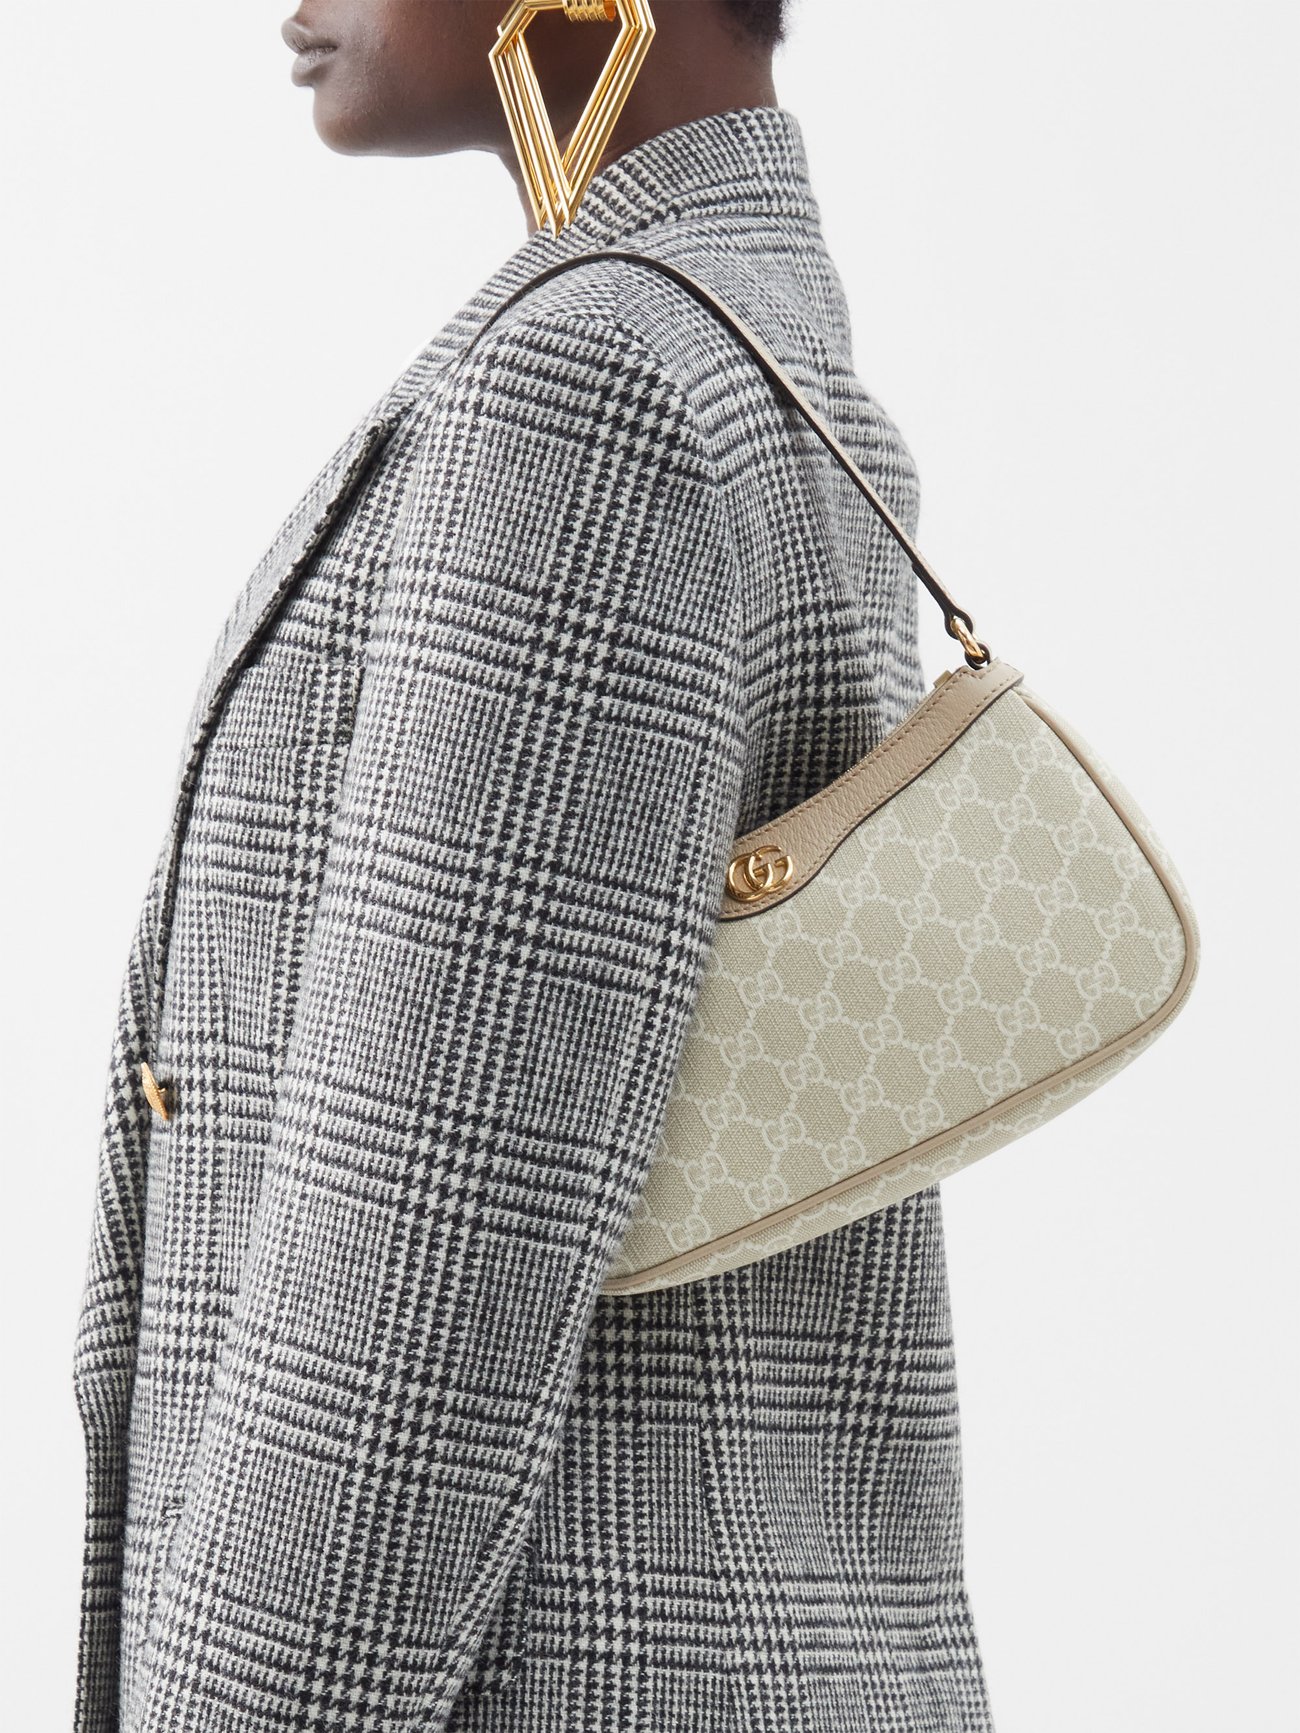 Gucci Ophidia Mini Gg-supreme Canvas Shoulder Bag - Beige White - ShopStyle